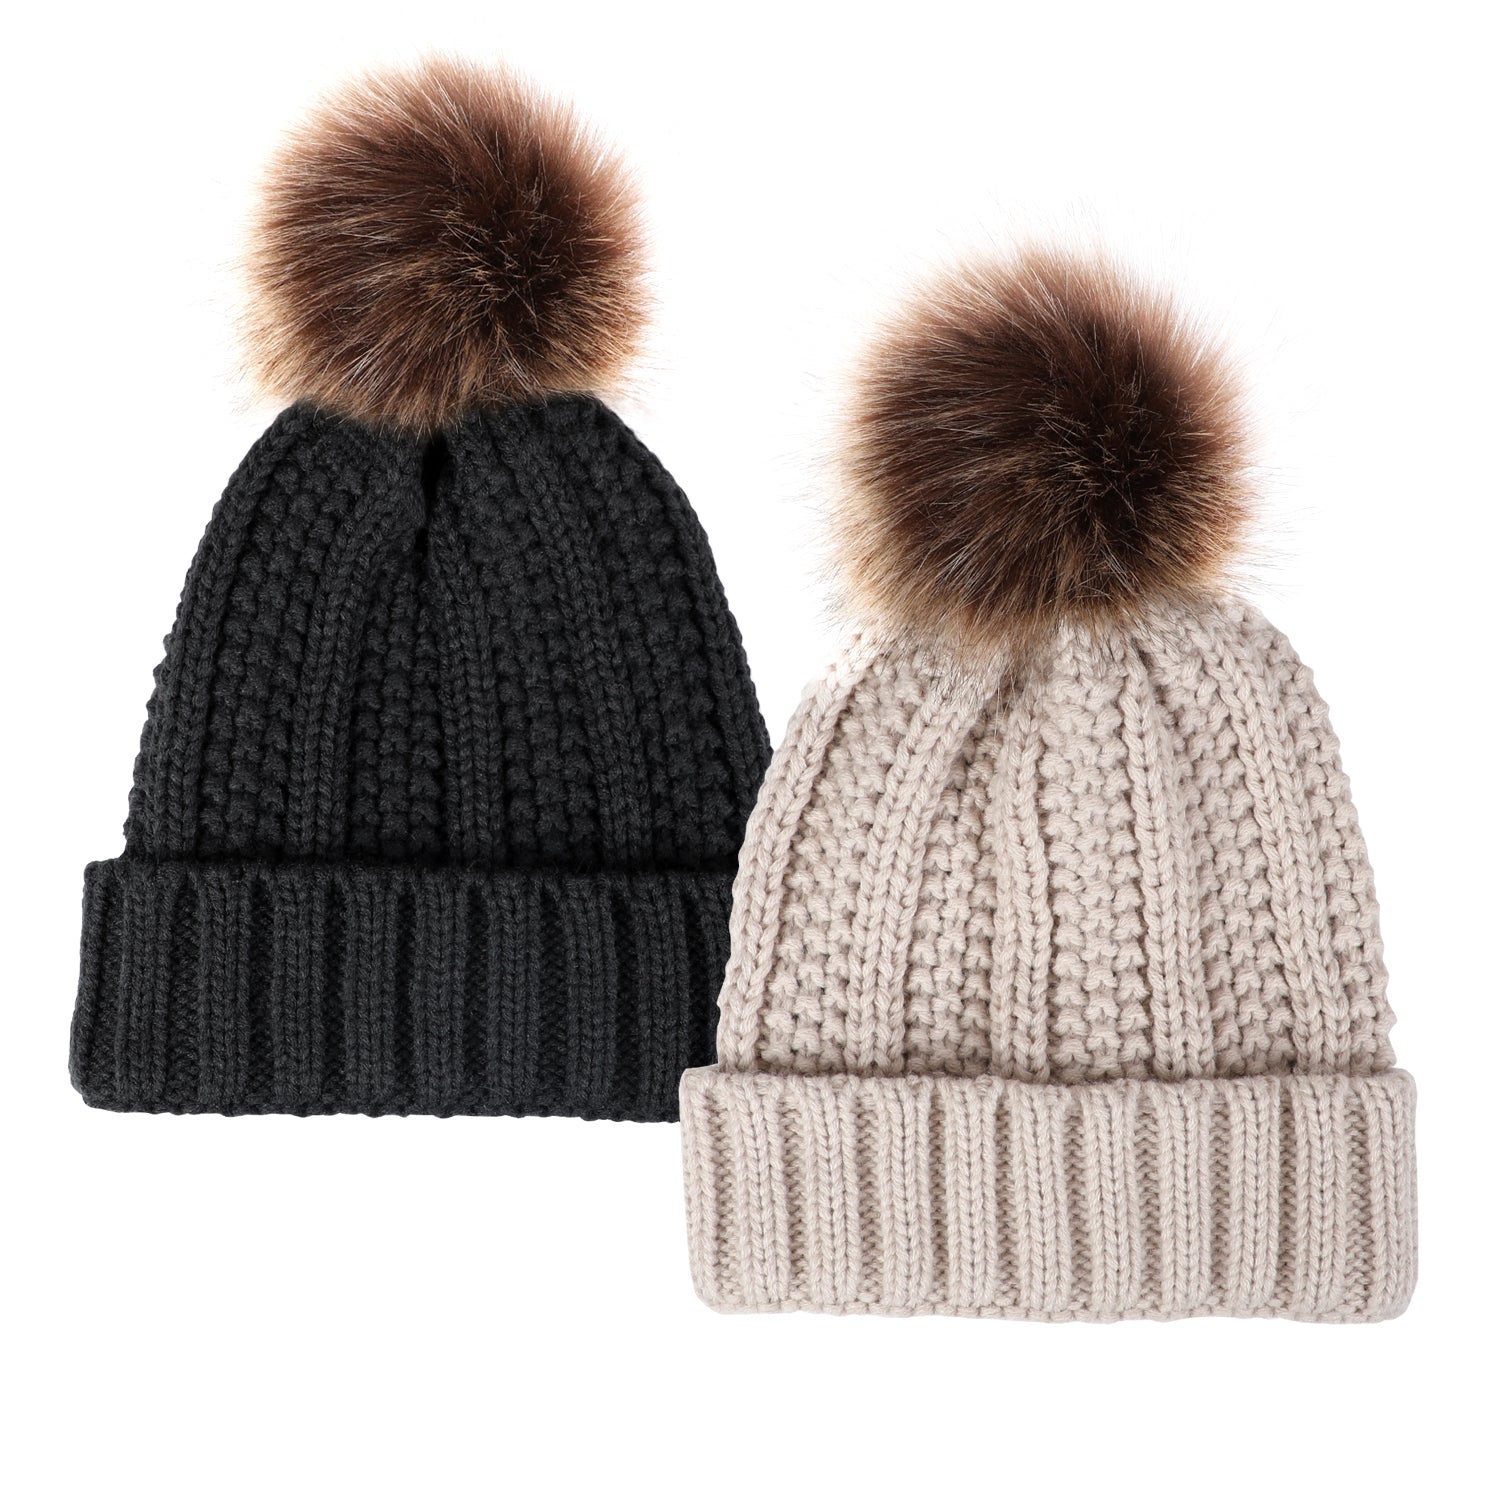 SUOSDEY Womens Trendy Winter Knit Beanie Hat Warm and Soft Skull Ski C ...